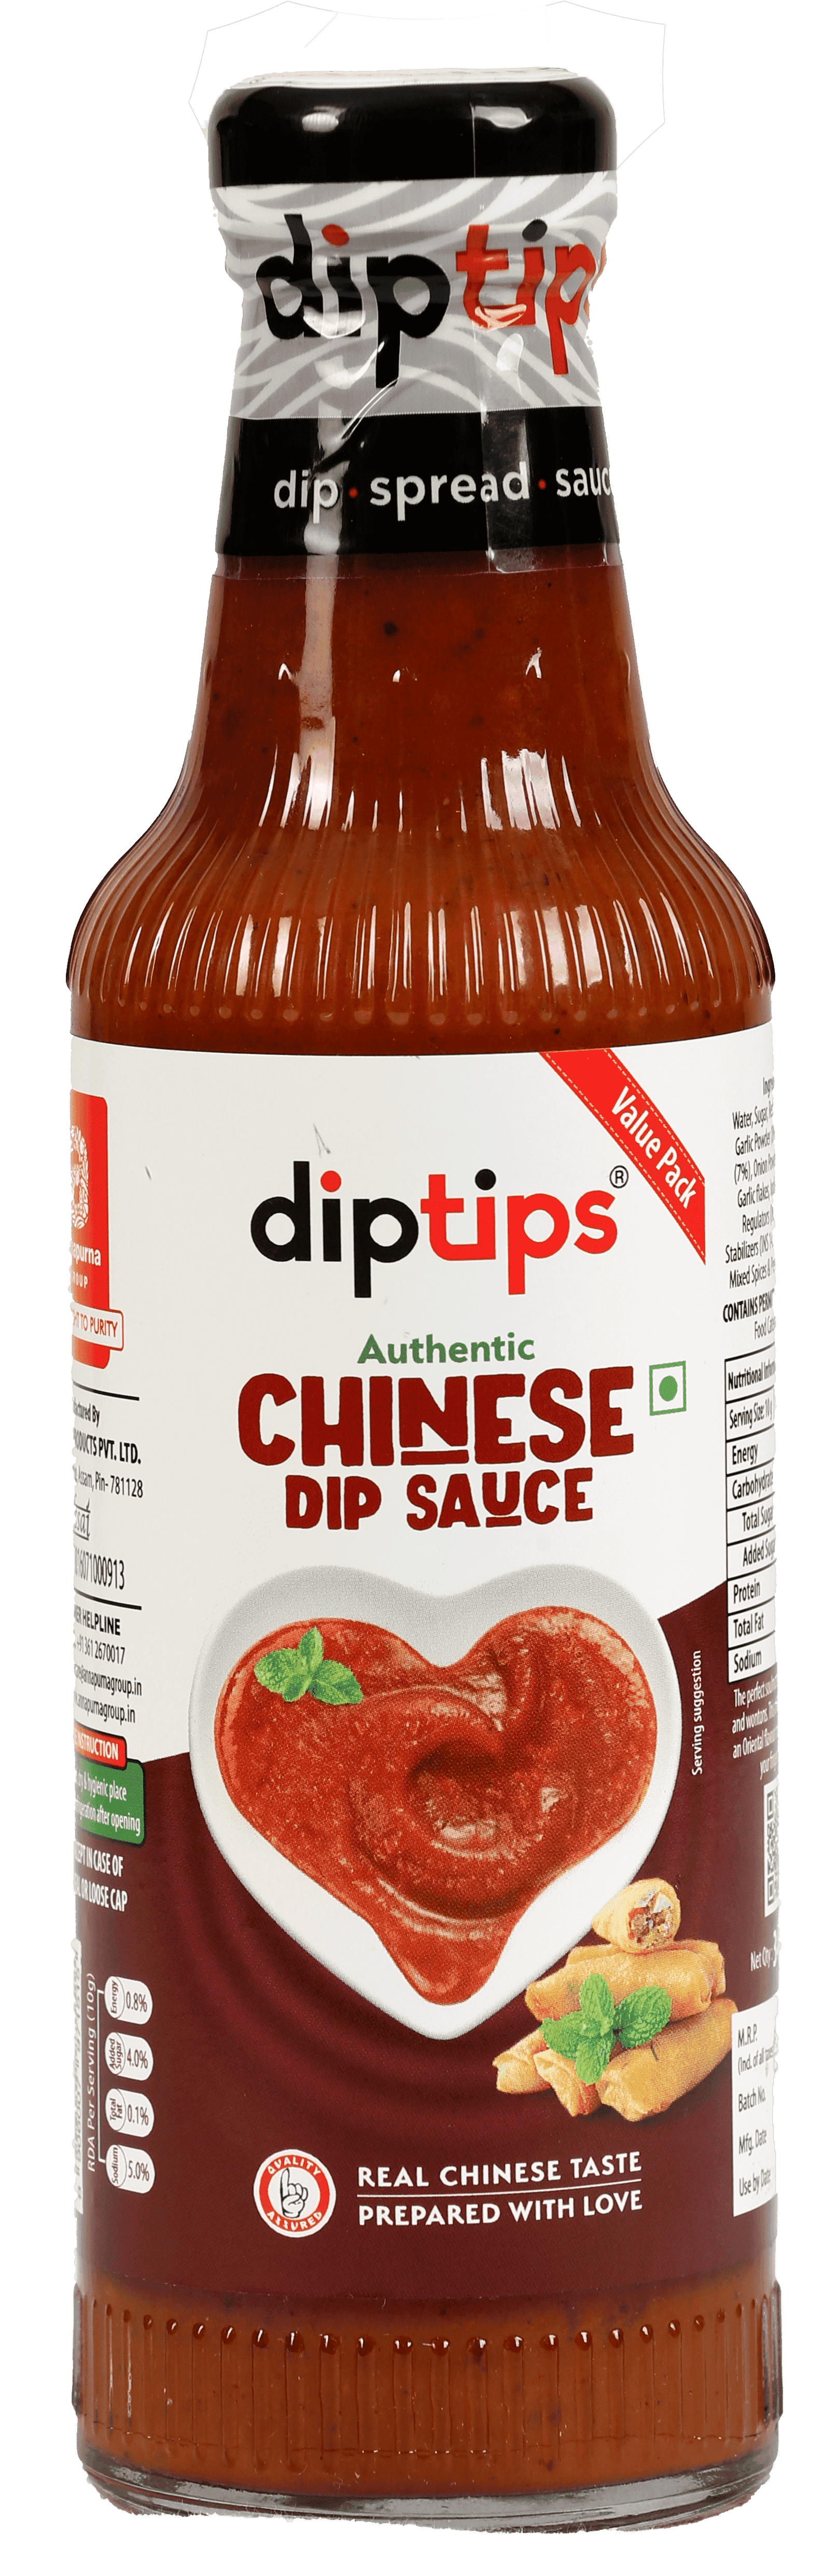 Chinese Dip